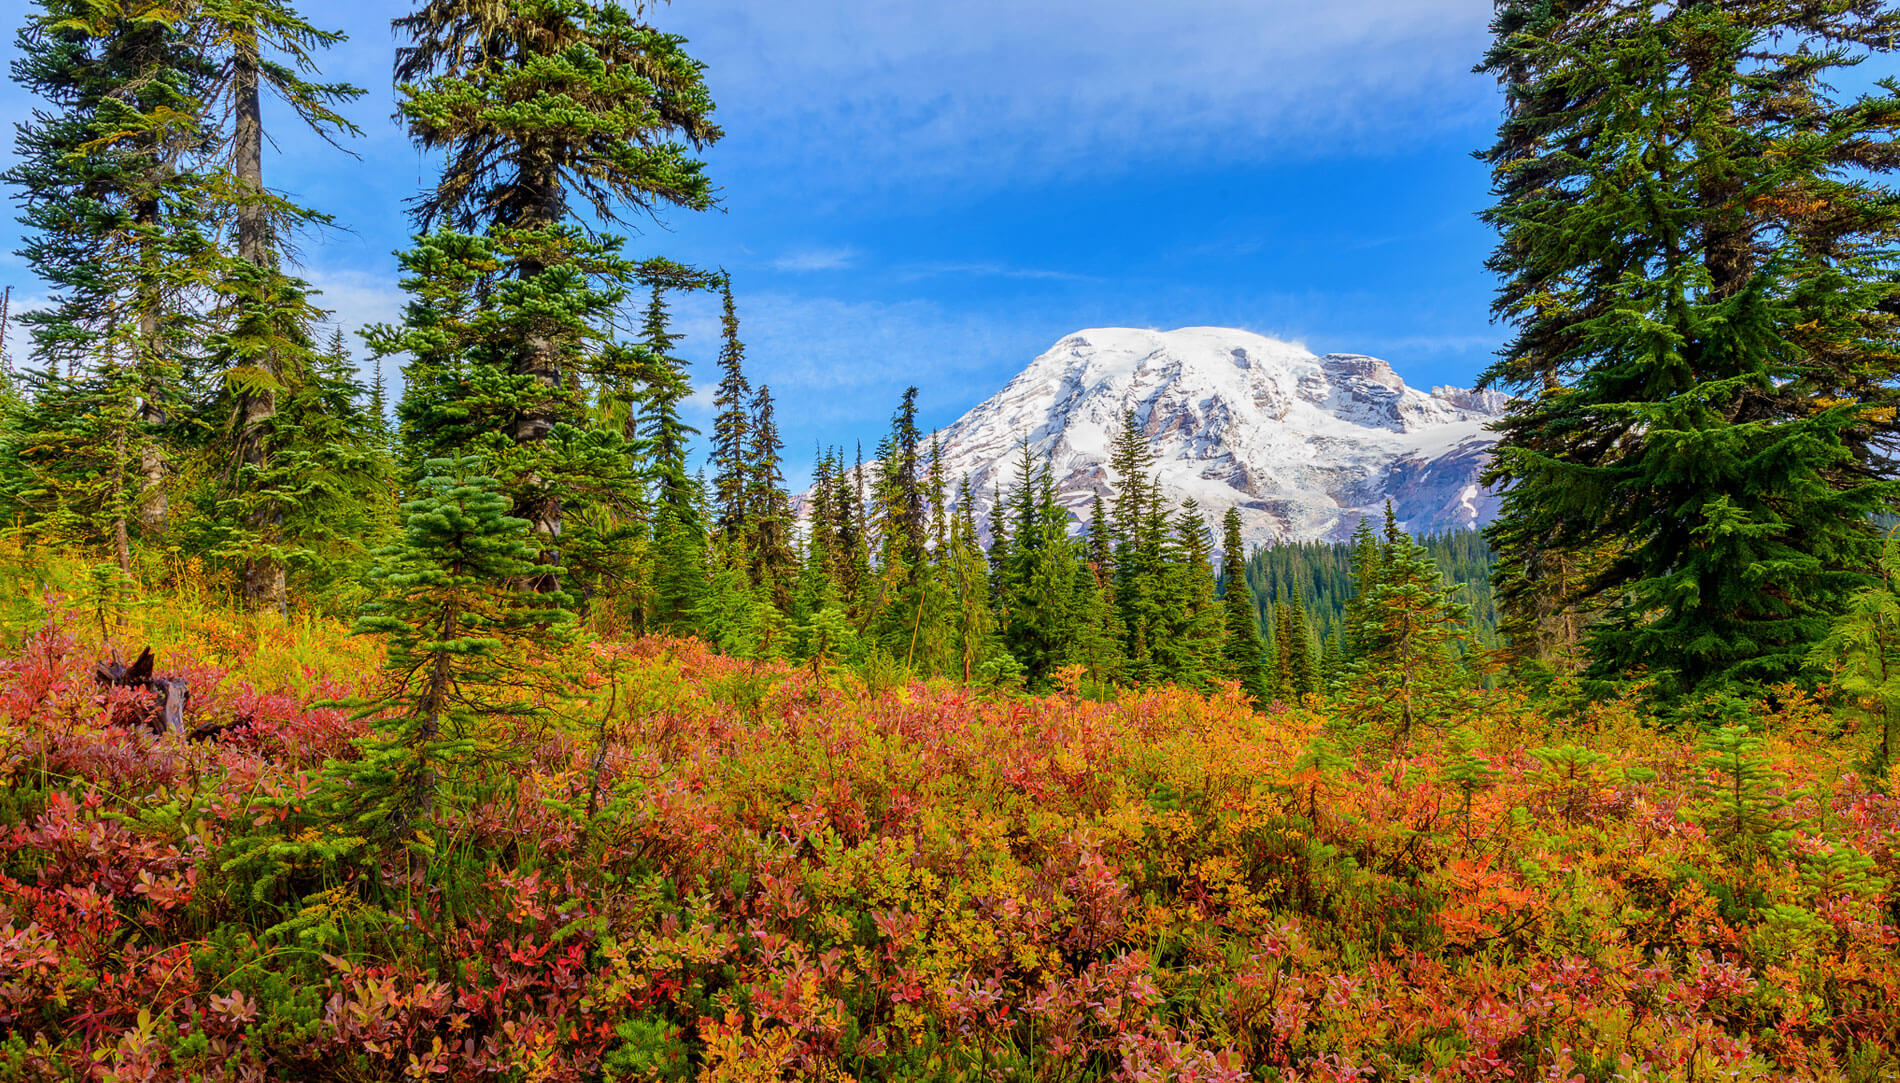 Fall colors at Mount Rainier